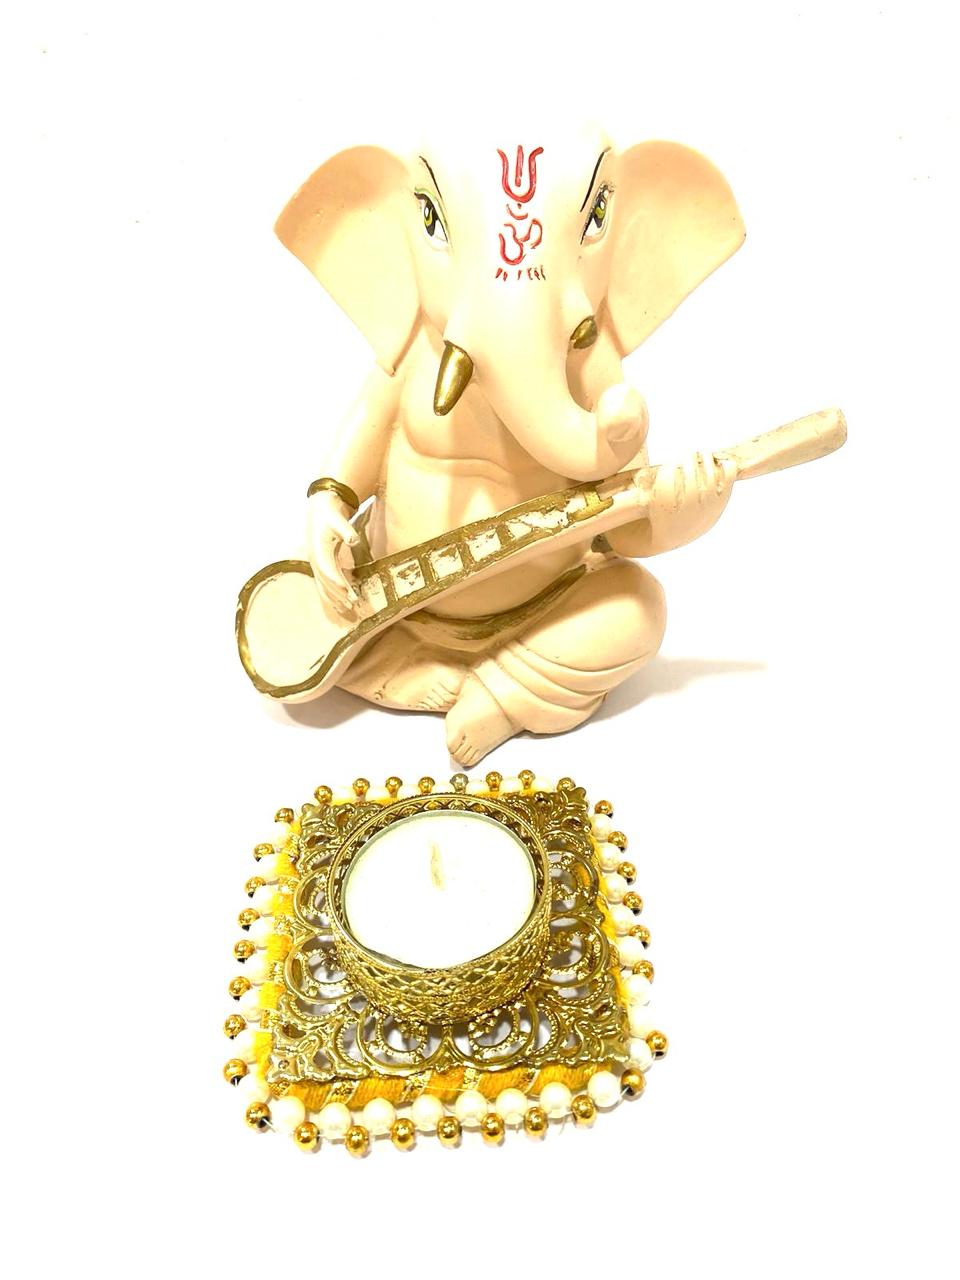 Tea Light Holders in Various Design Pooja Return Gift Ideas Handmade Tamrapatra